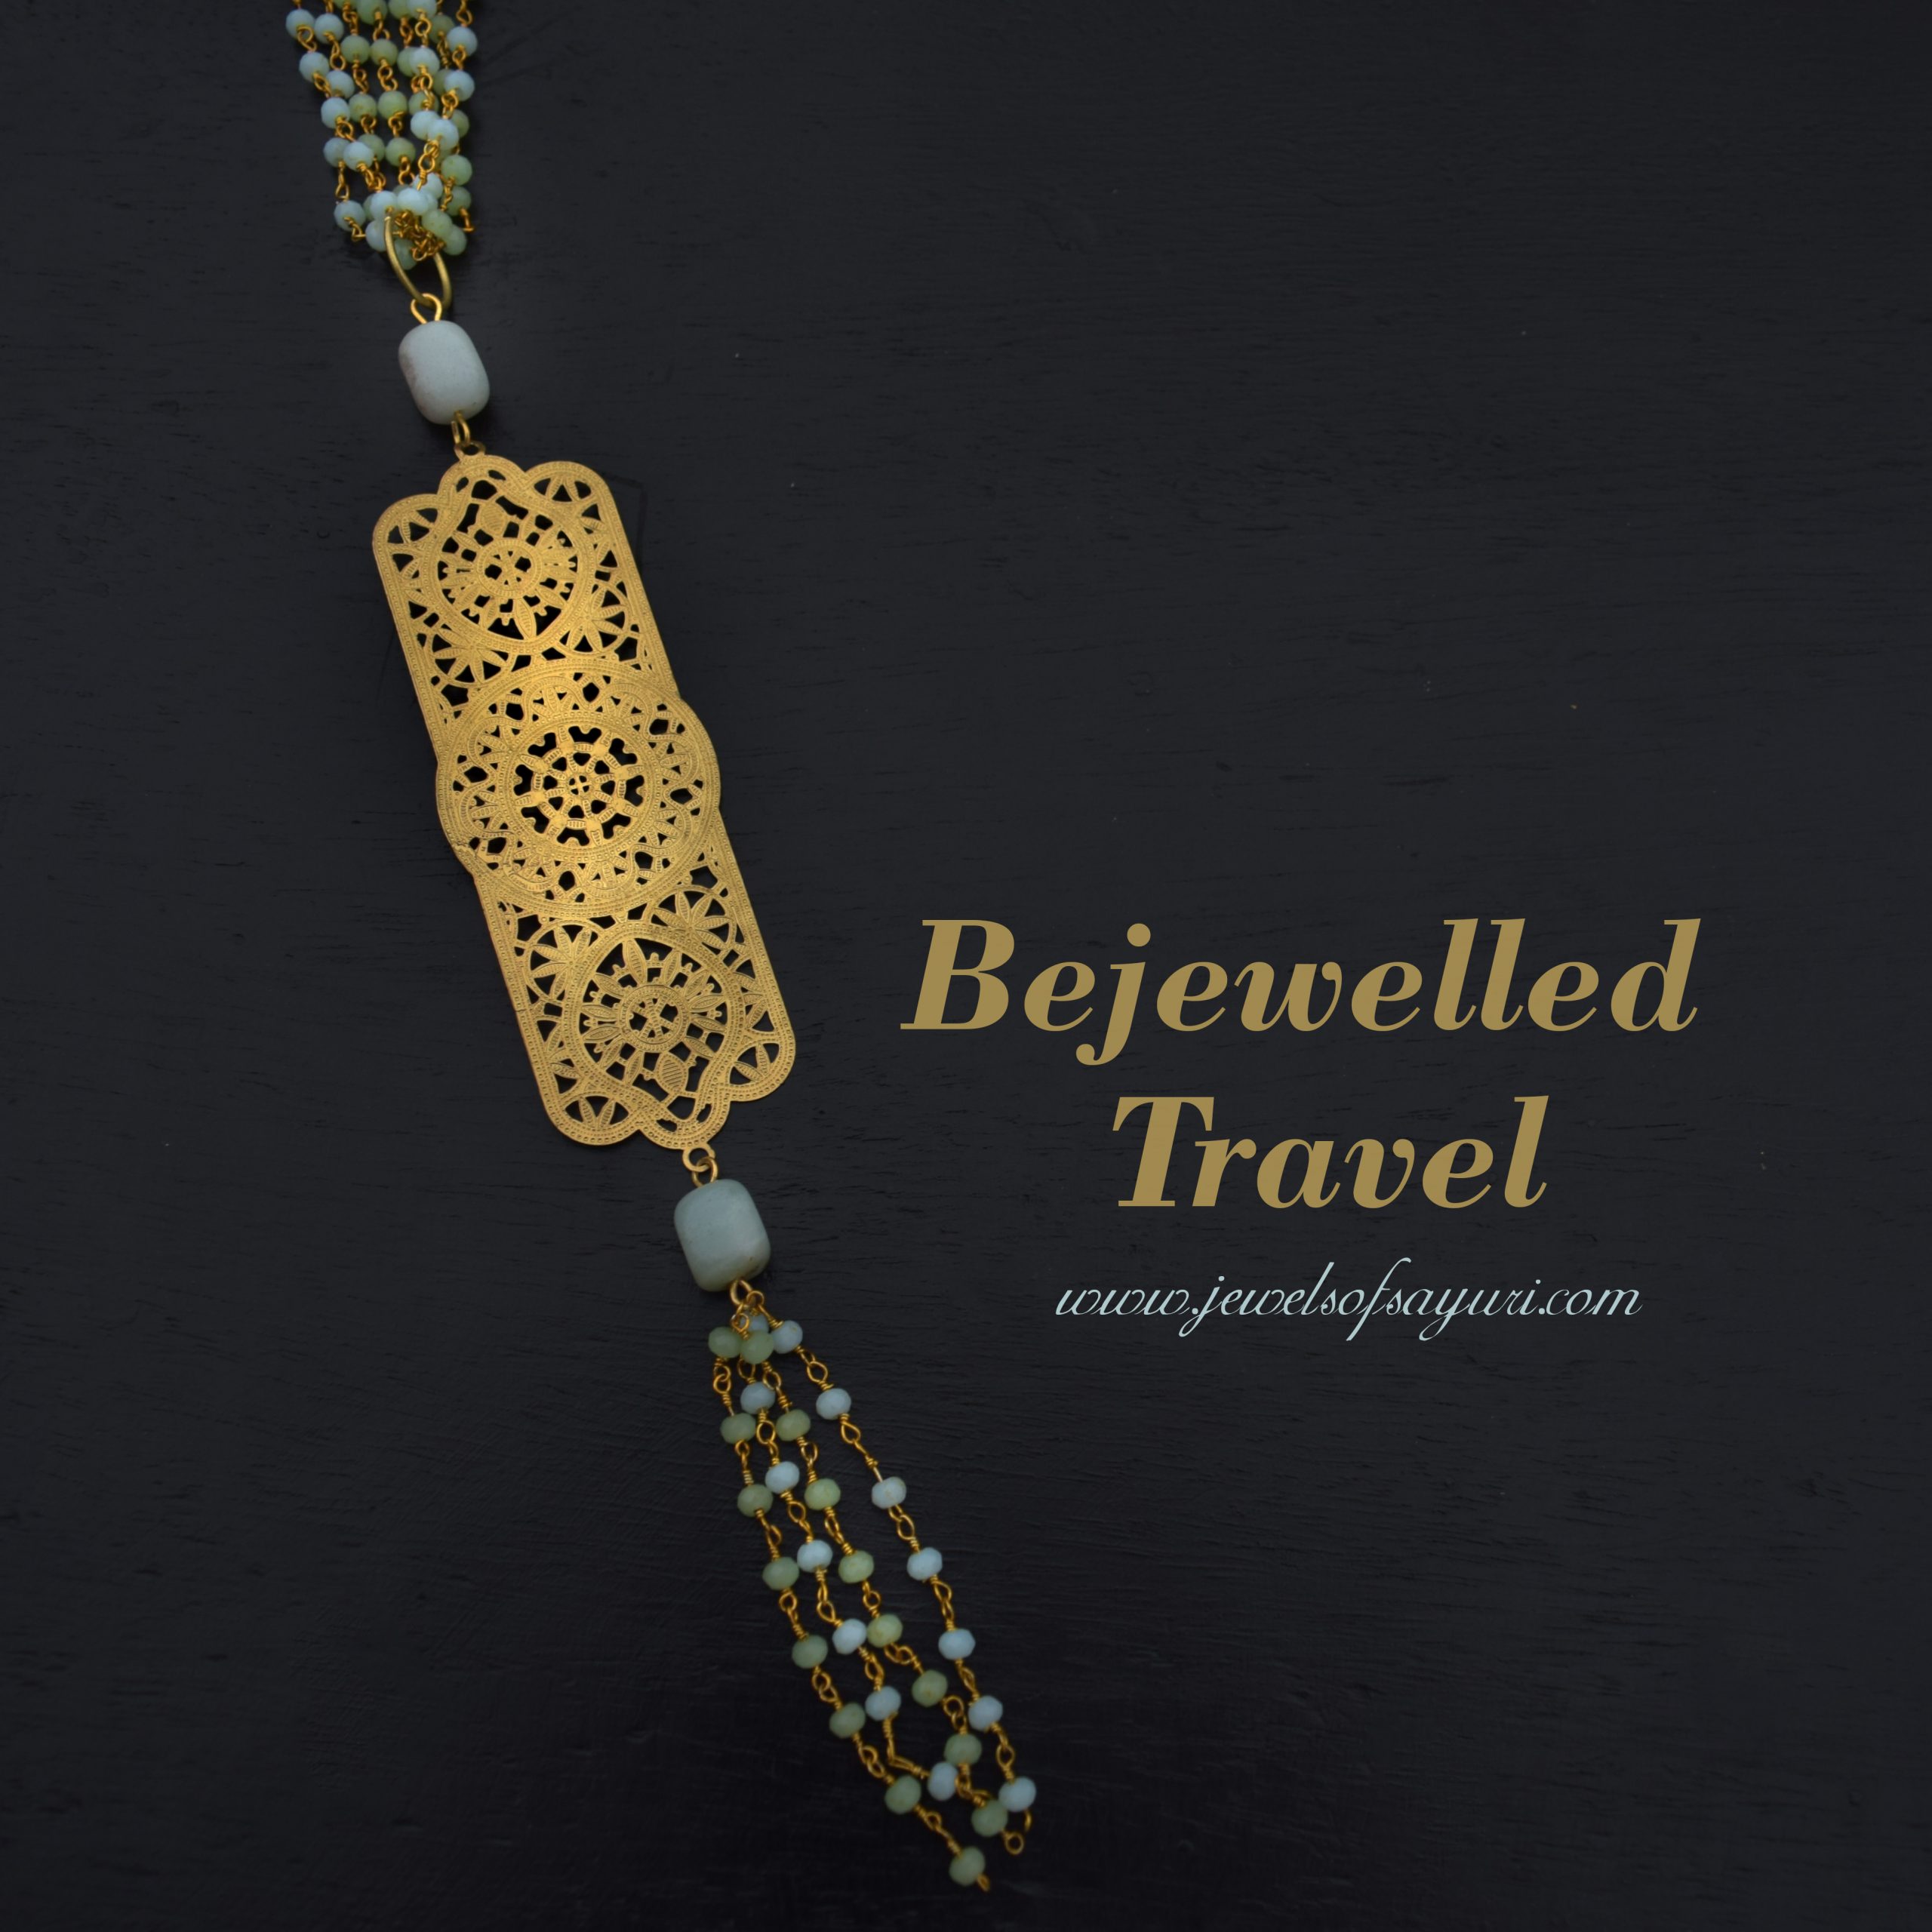 bejewelled travel